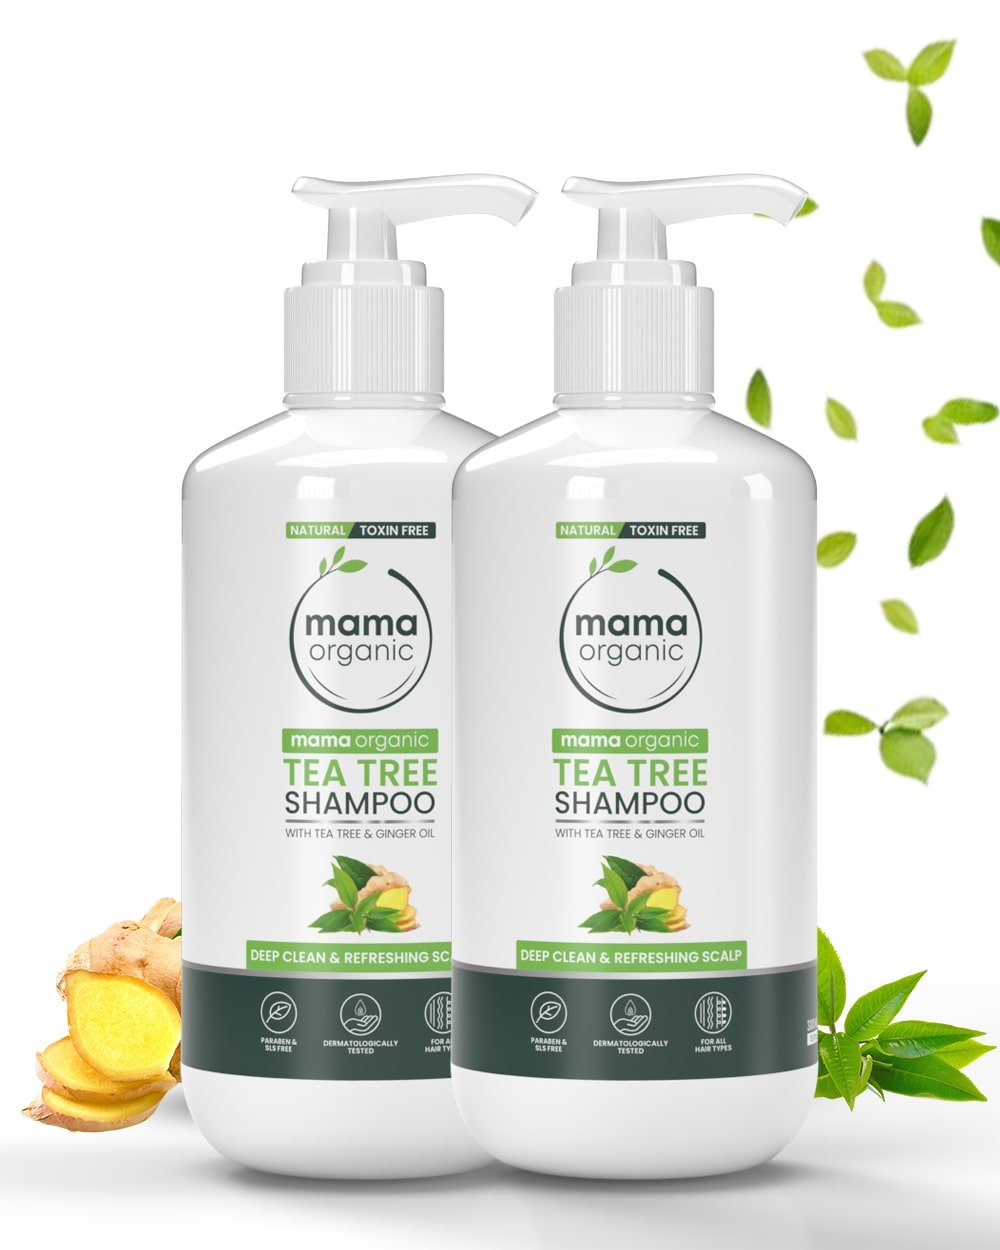 Tea Tree Shampoo 300ml Combo For Deep Clean & Refresh Scalp - Natural & Toxin-Free - MamaOrganic